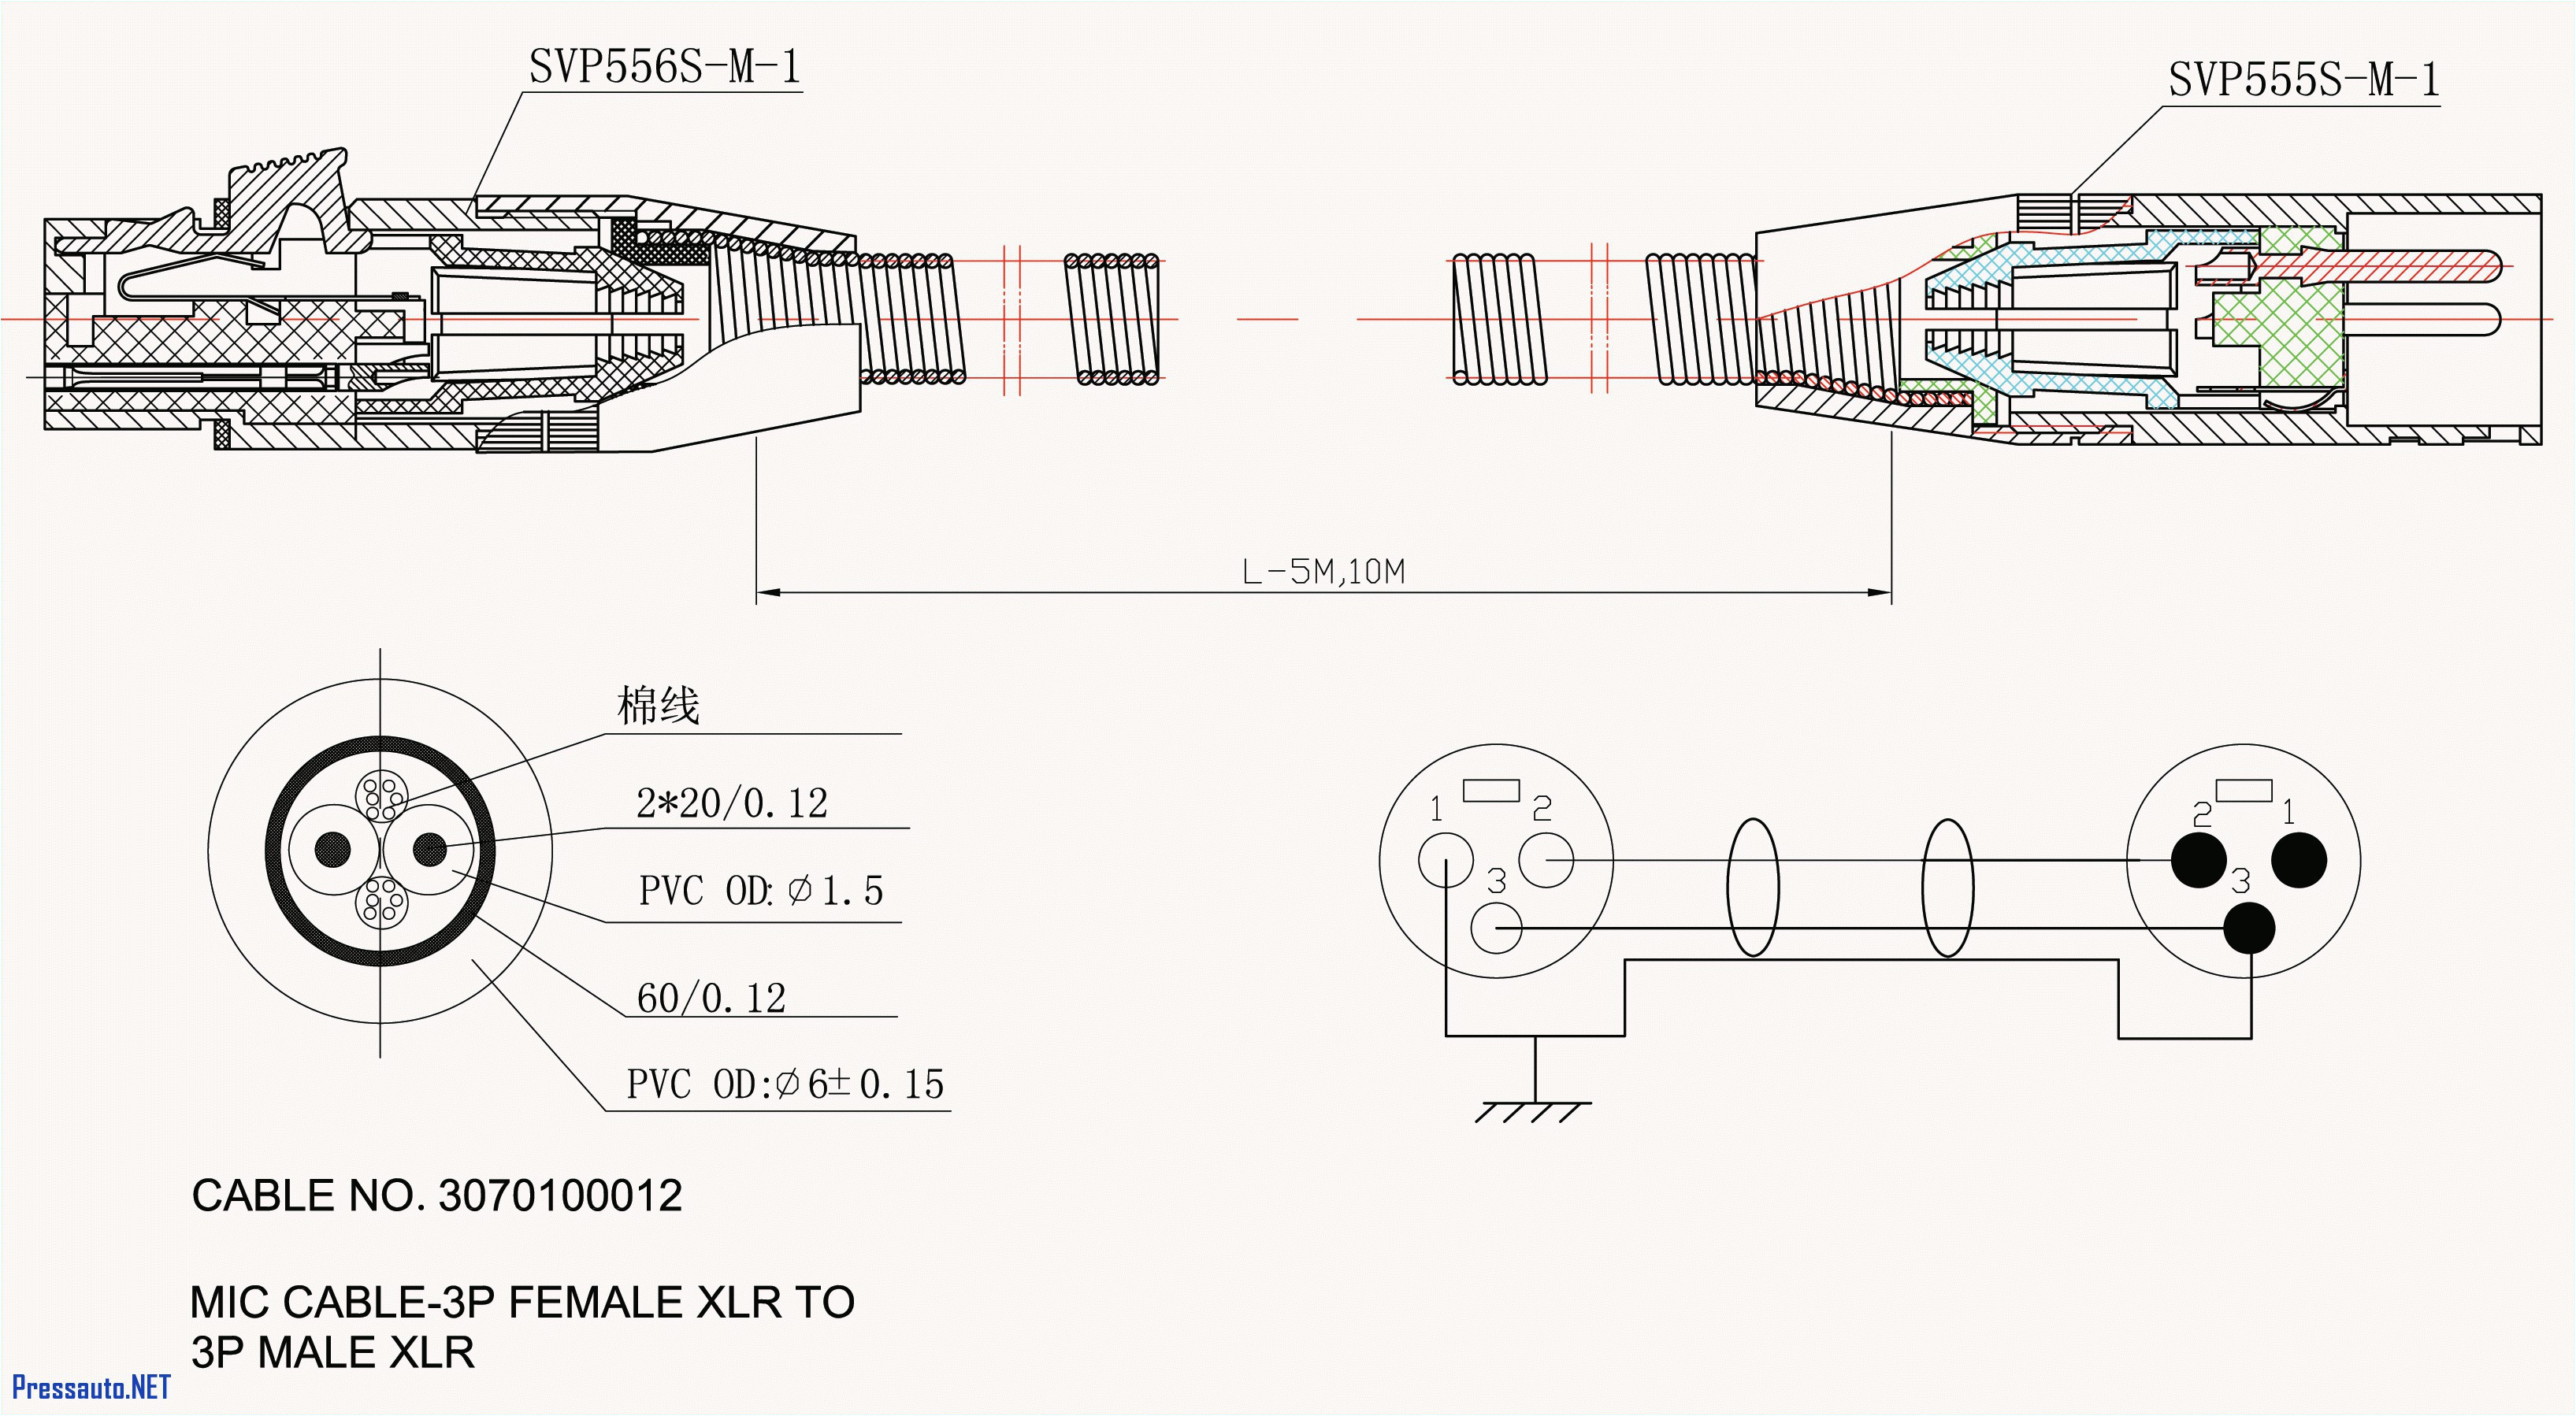 3 4l gm alternator wiring wiring diagram toolbox chevy 5 7 engine diagram pvc